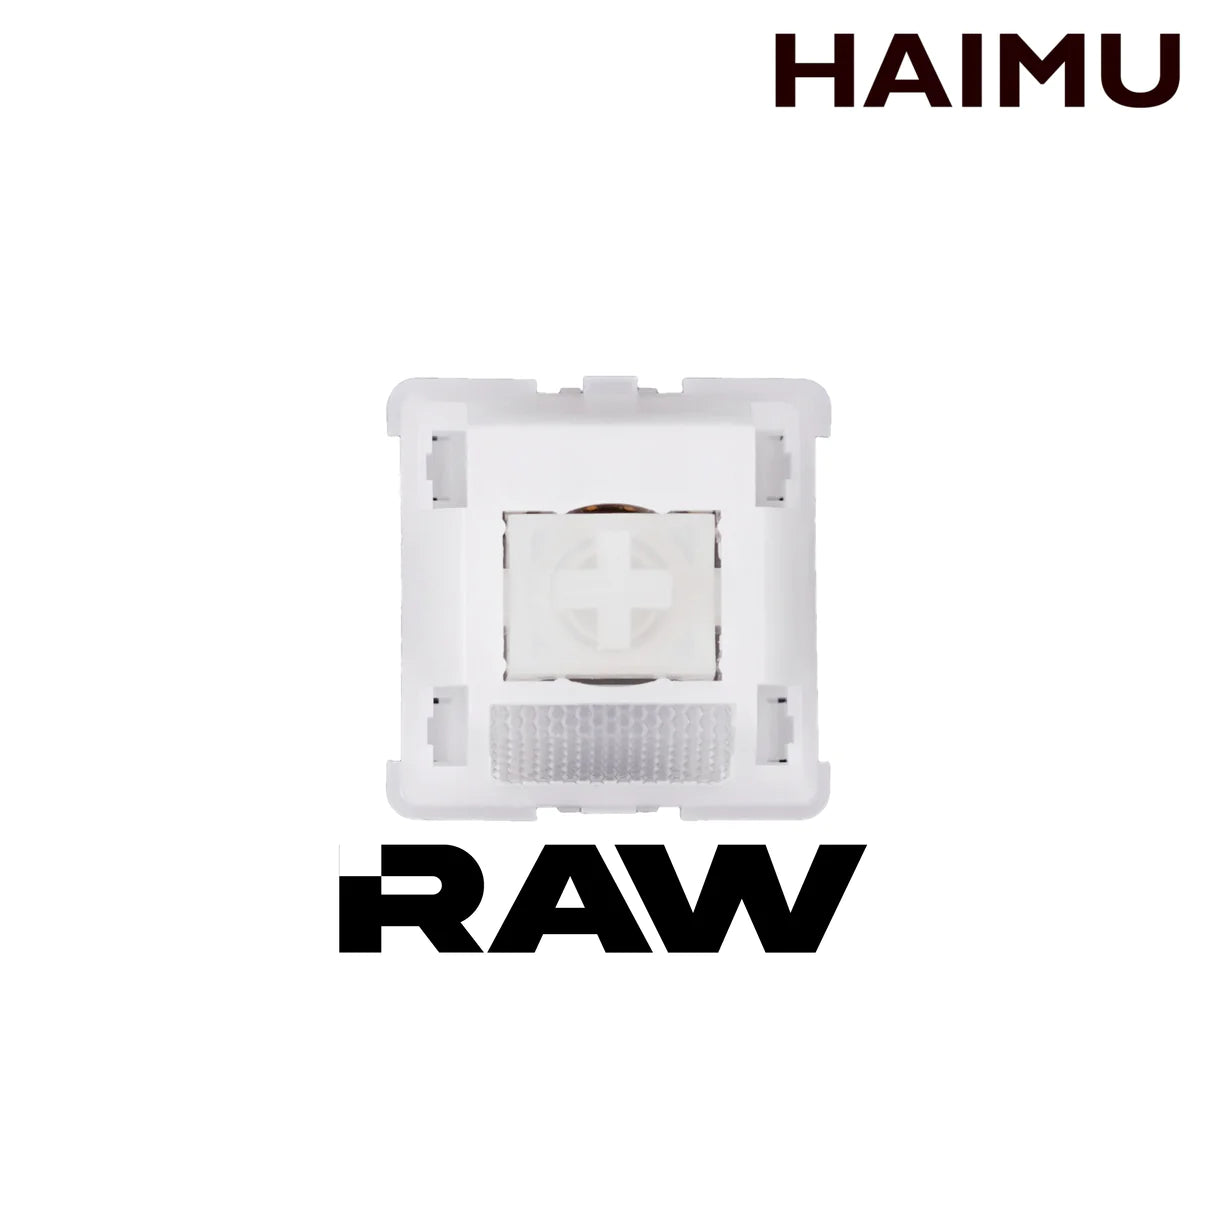 Haimu Raw Linear Switches - KeebsForAll